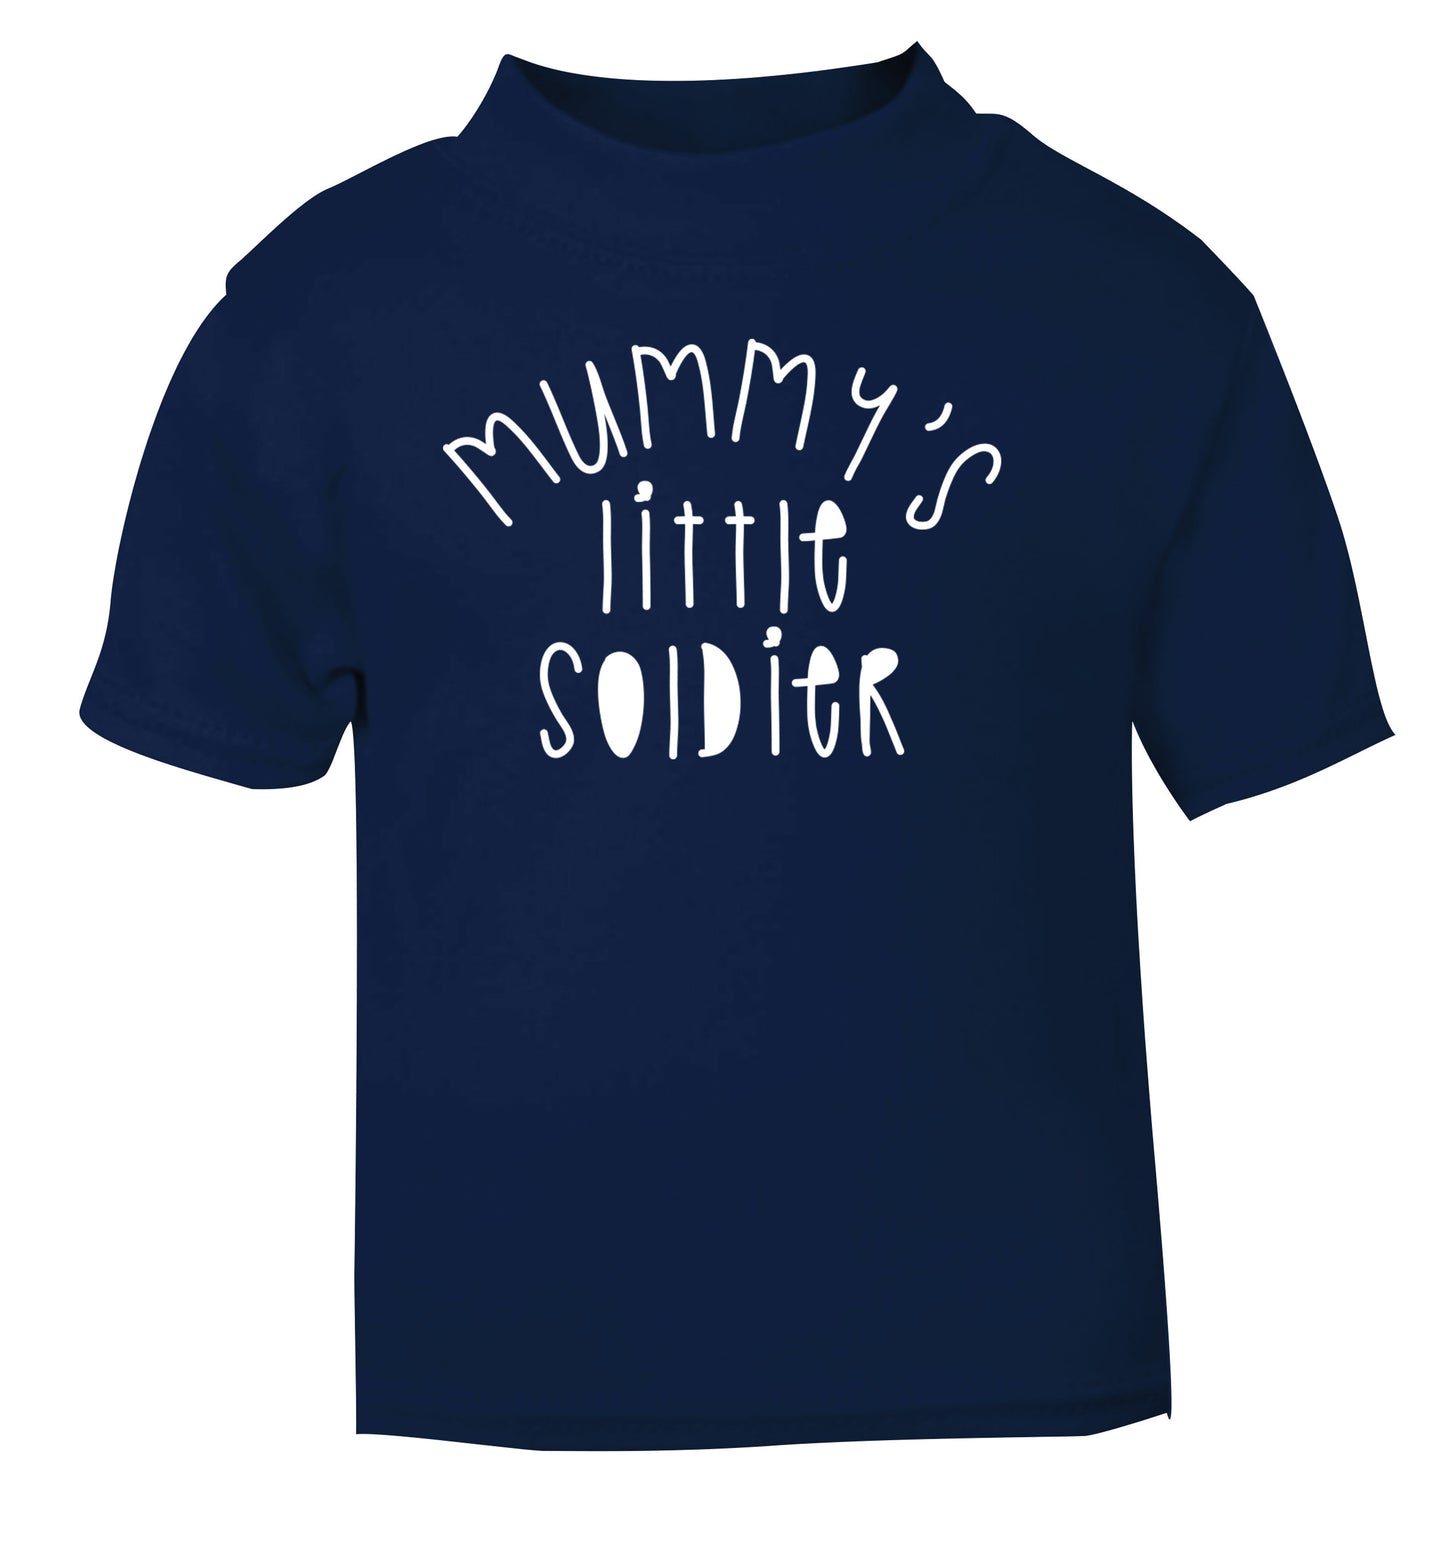 Mummy's little soldier navy Baby Toddler Tshirt 2 Years